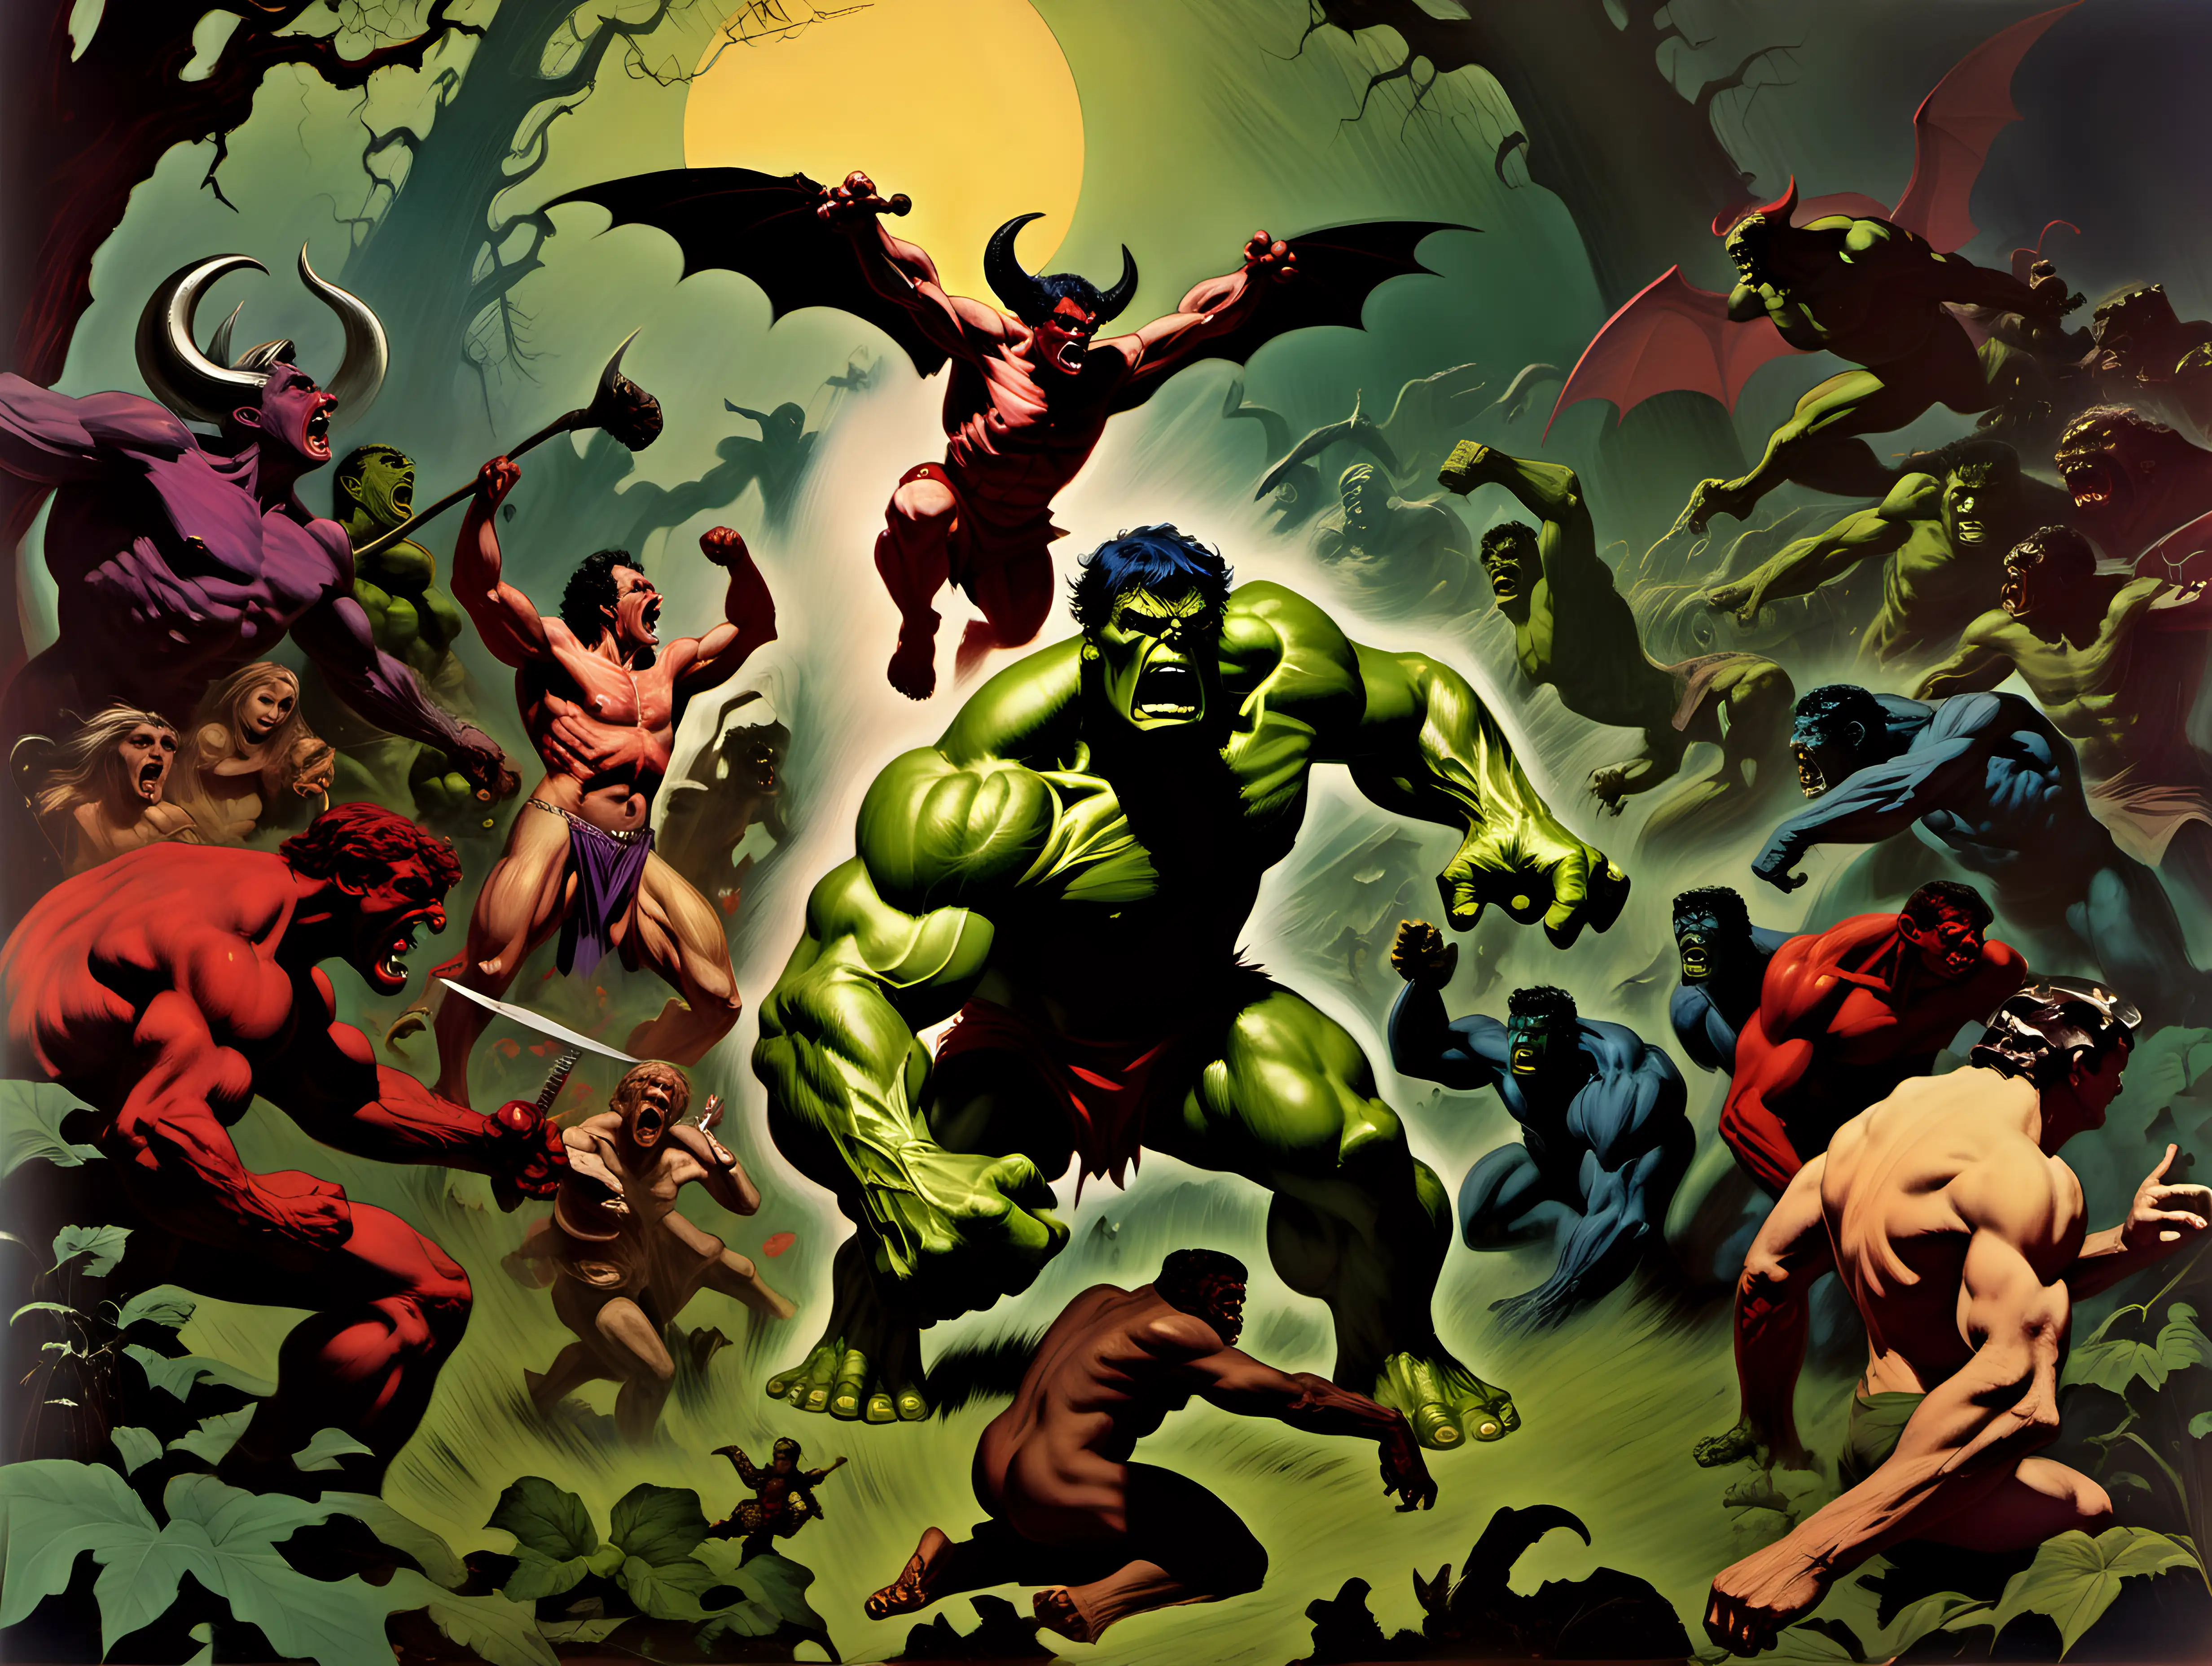 Epic Battle Satan vs Hulk in Colorful Frazetta Style